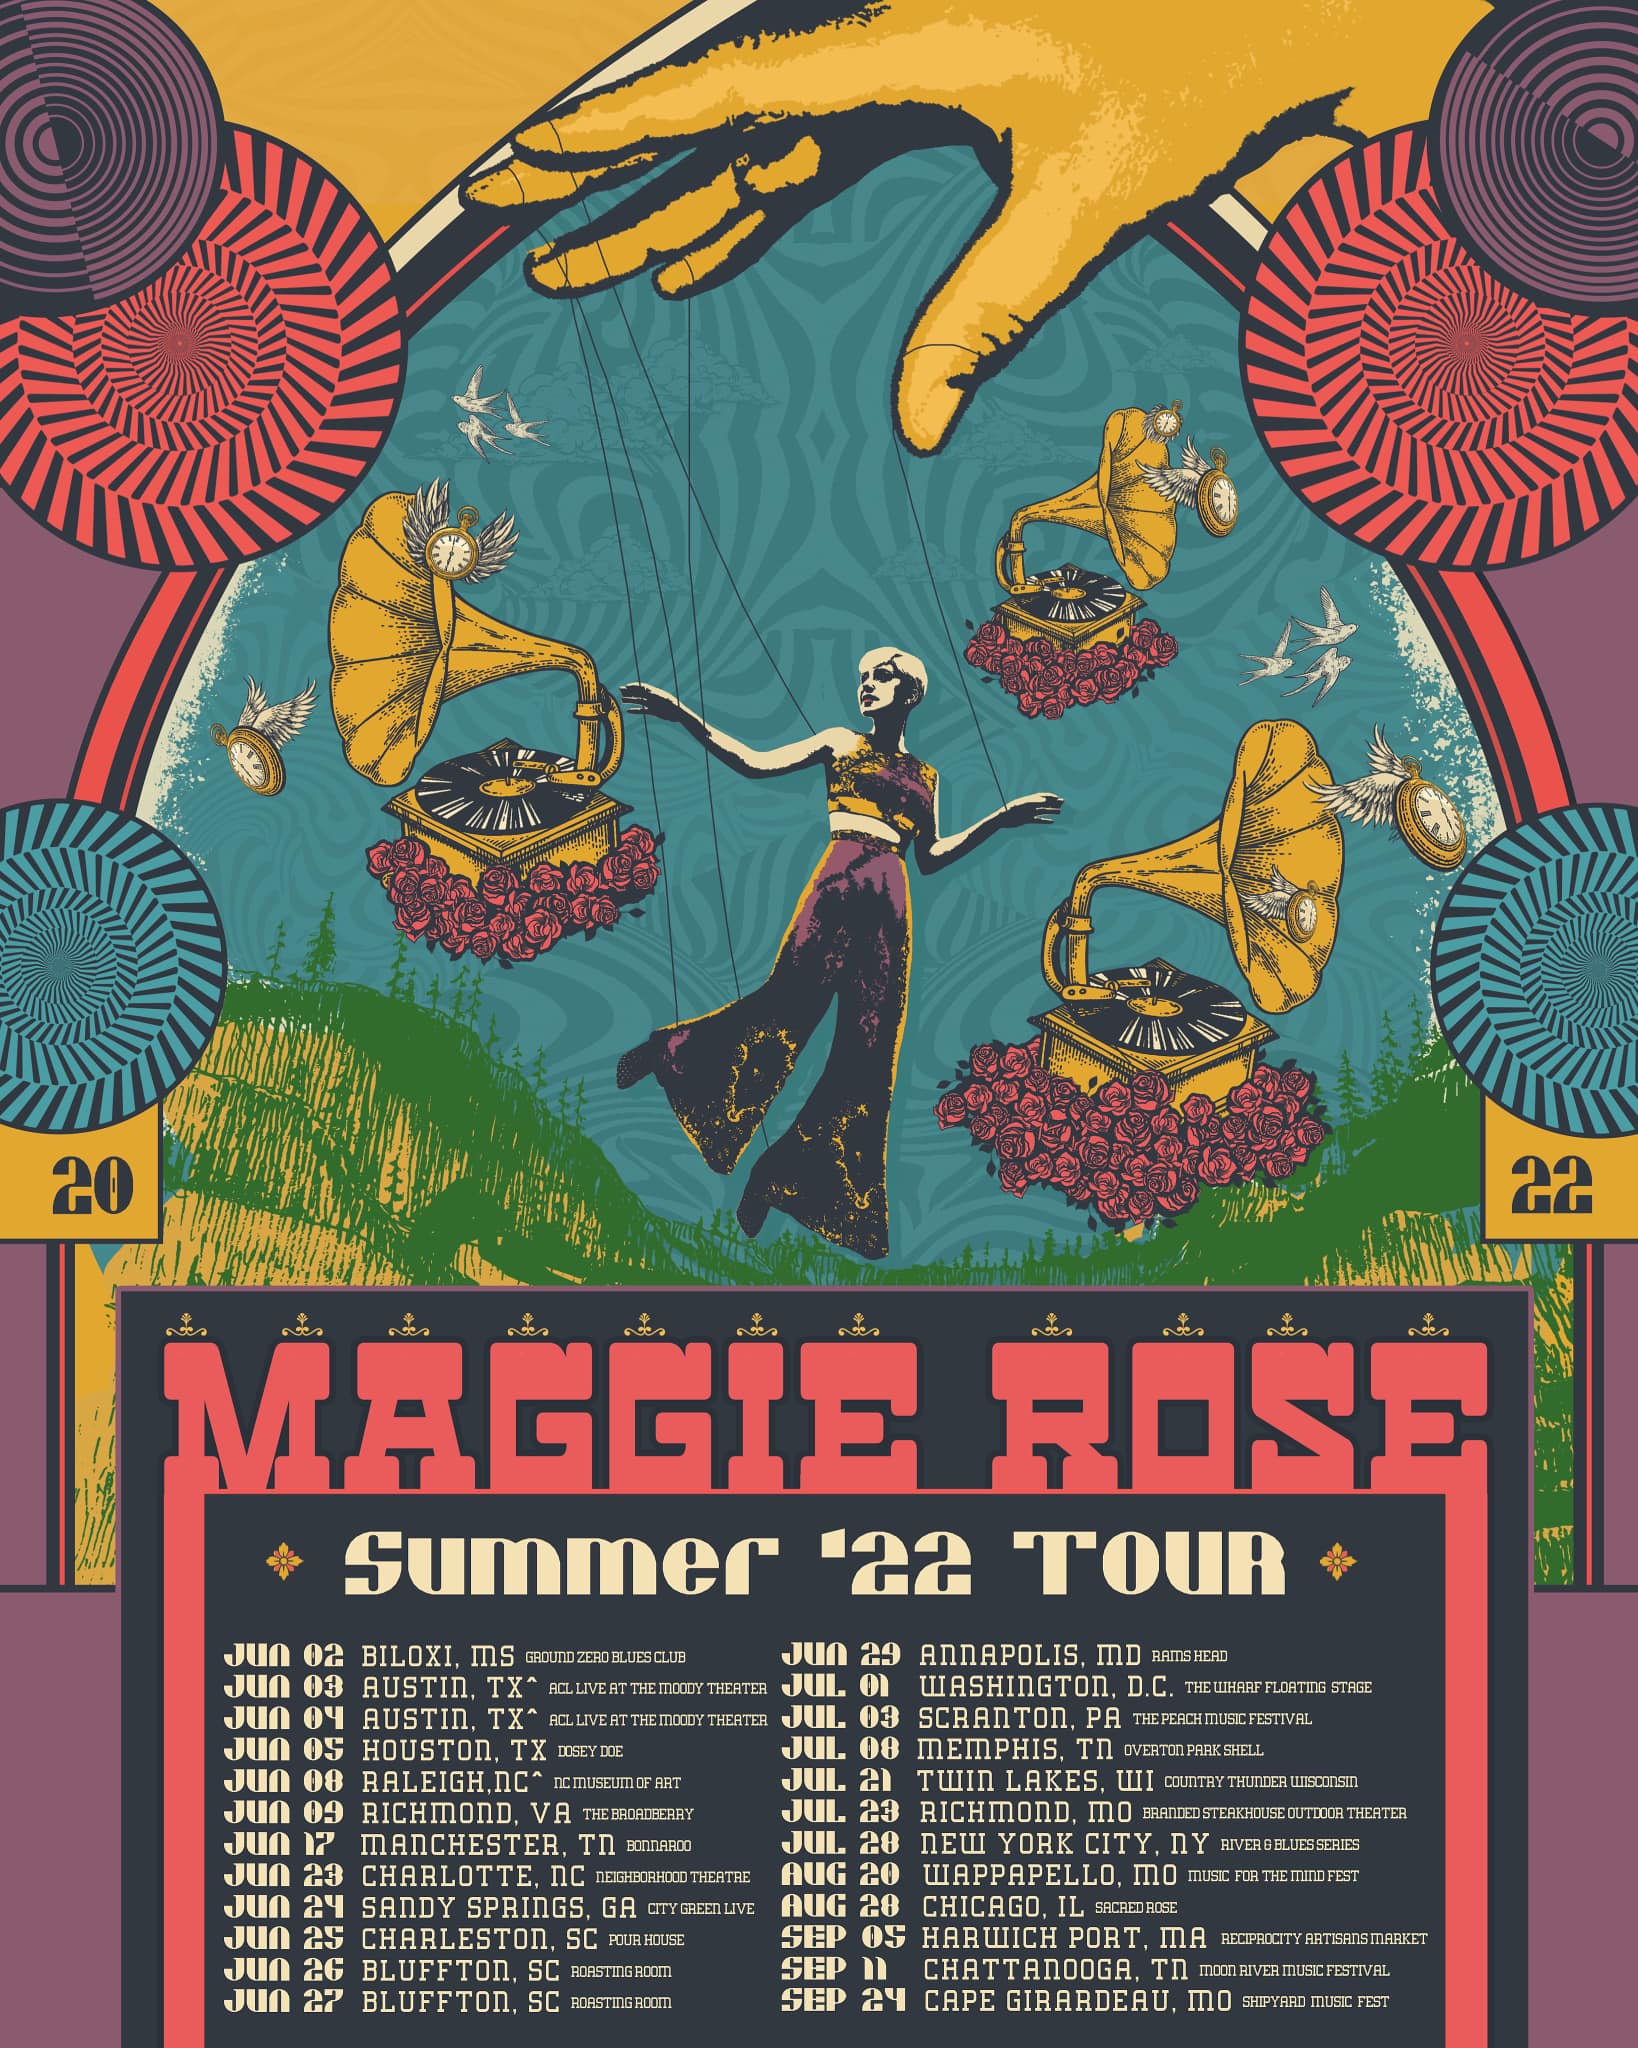 Maggie Rose Summer 2022 Tour